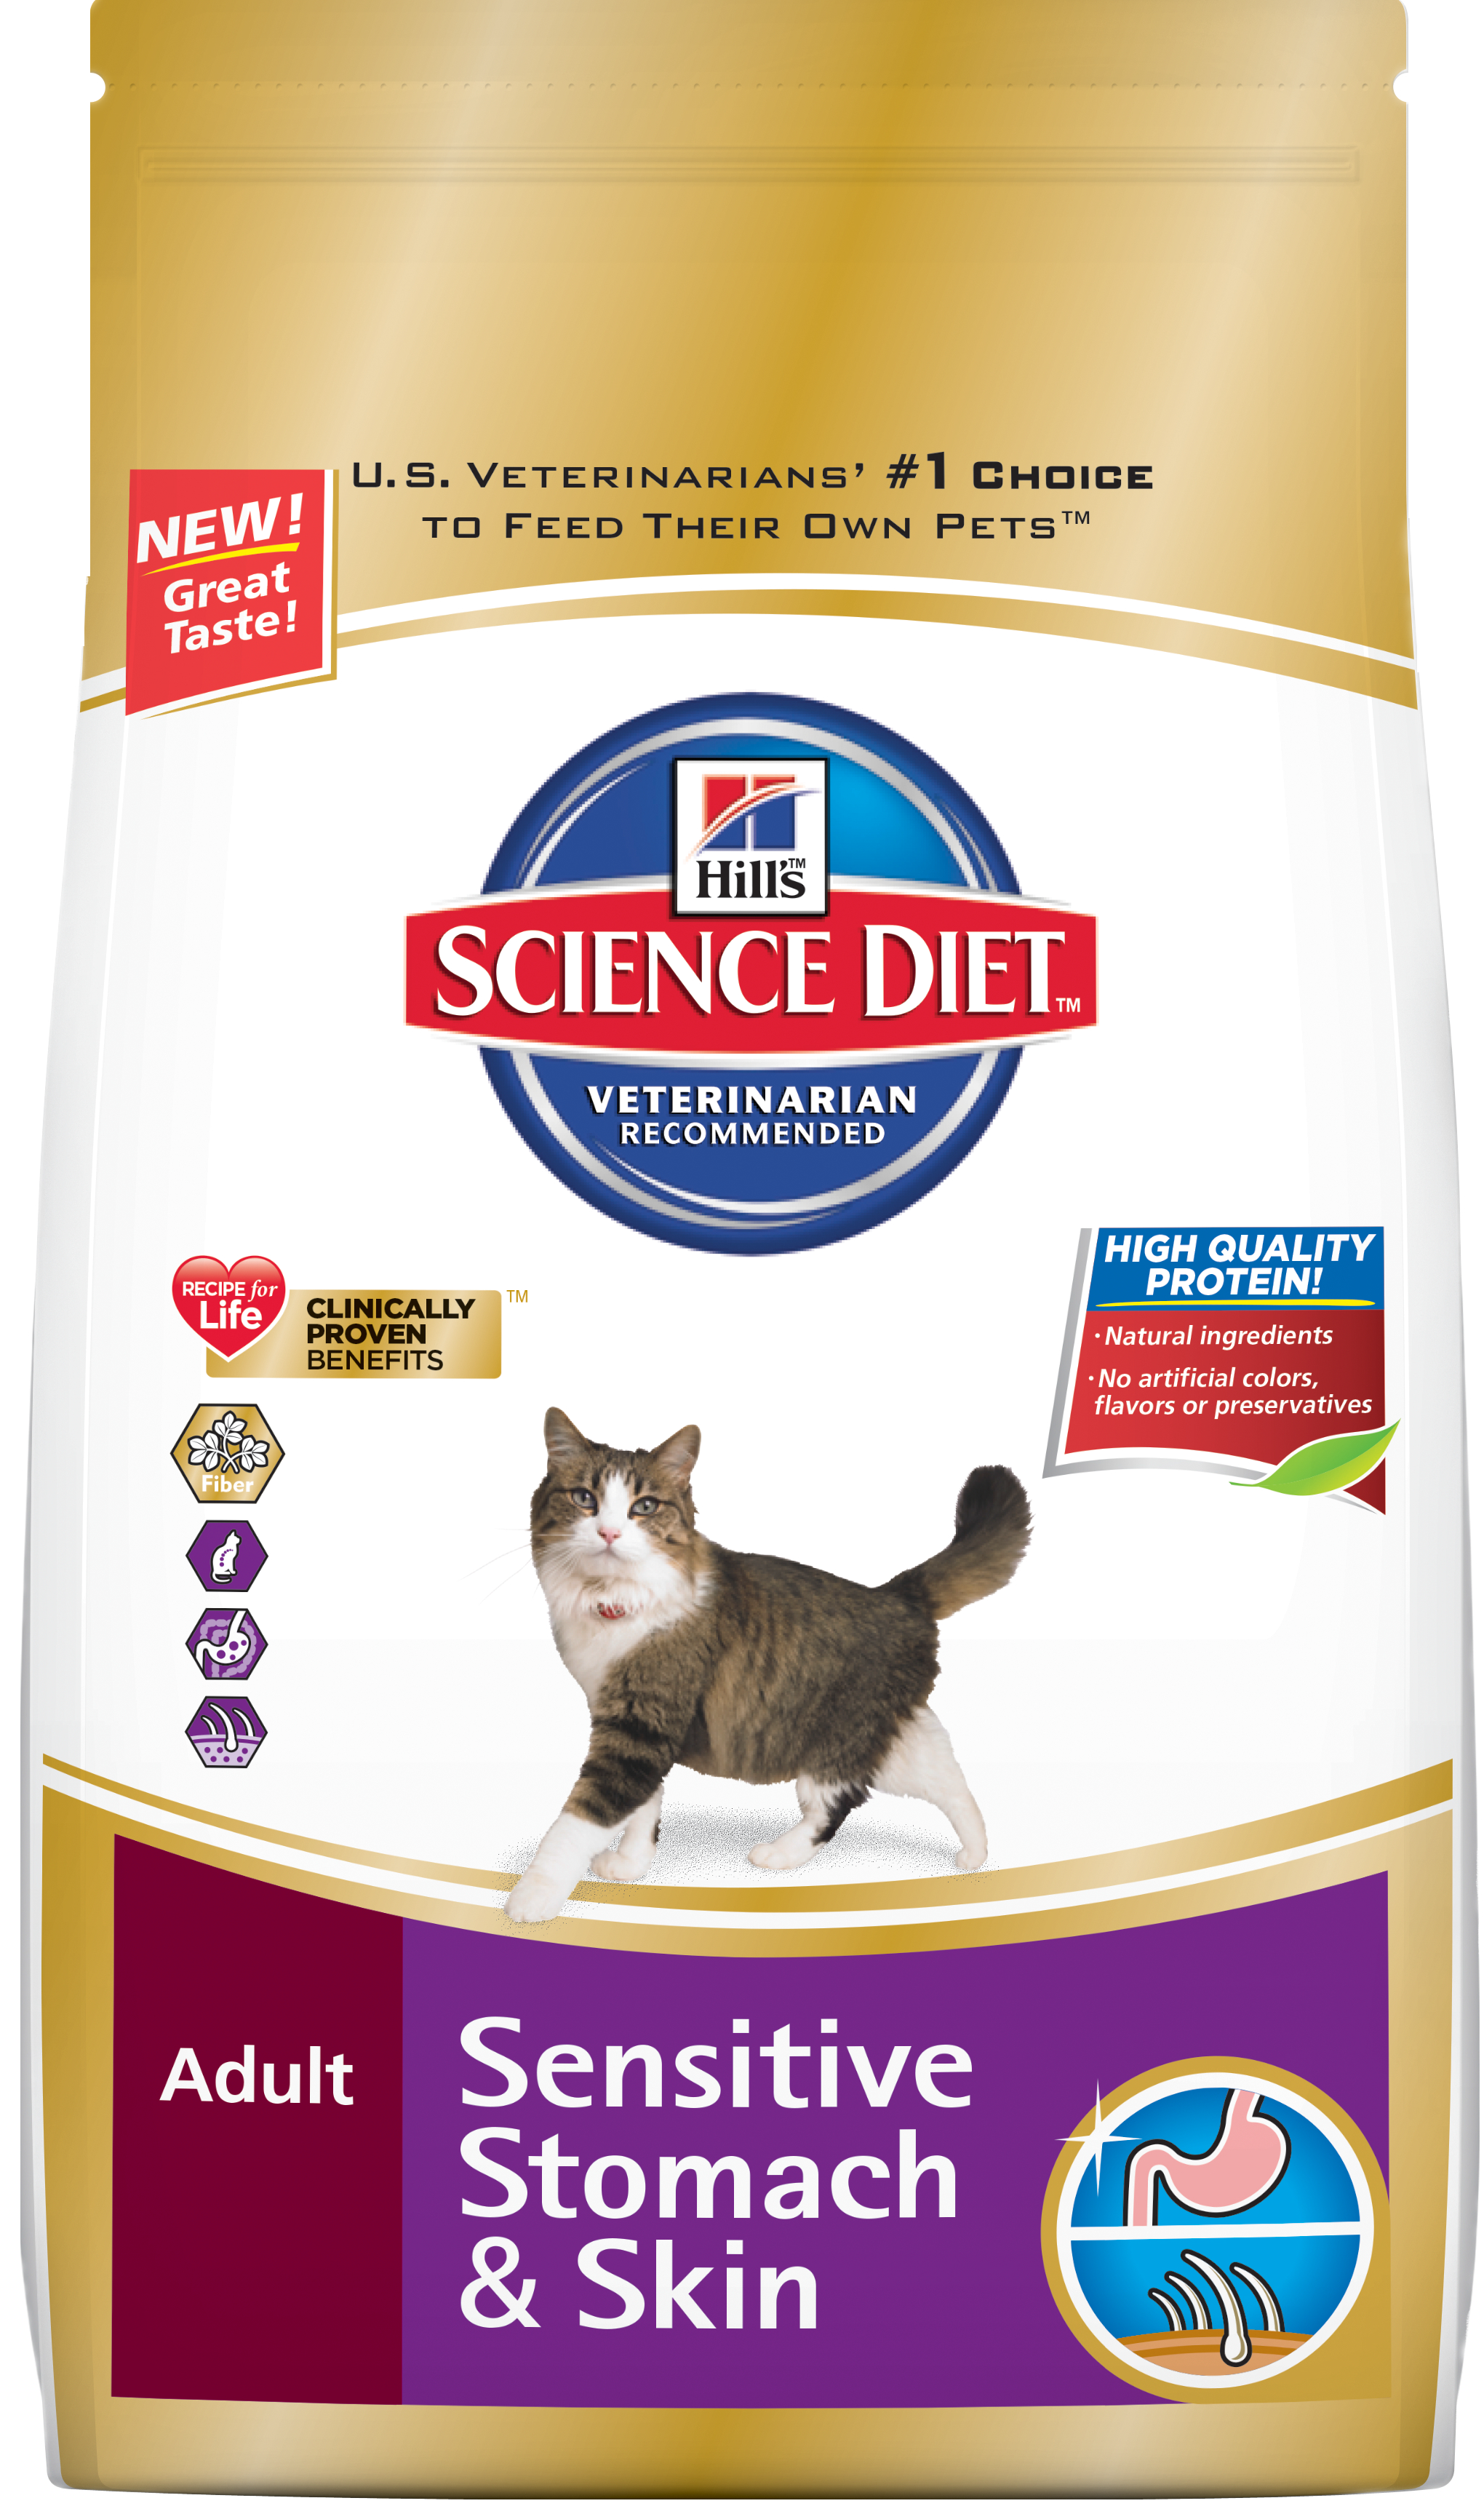 Sensitive Stomach Cat Food